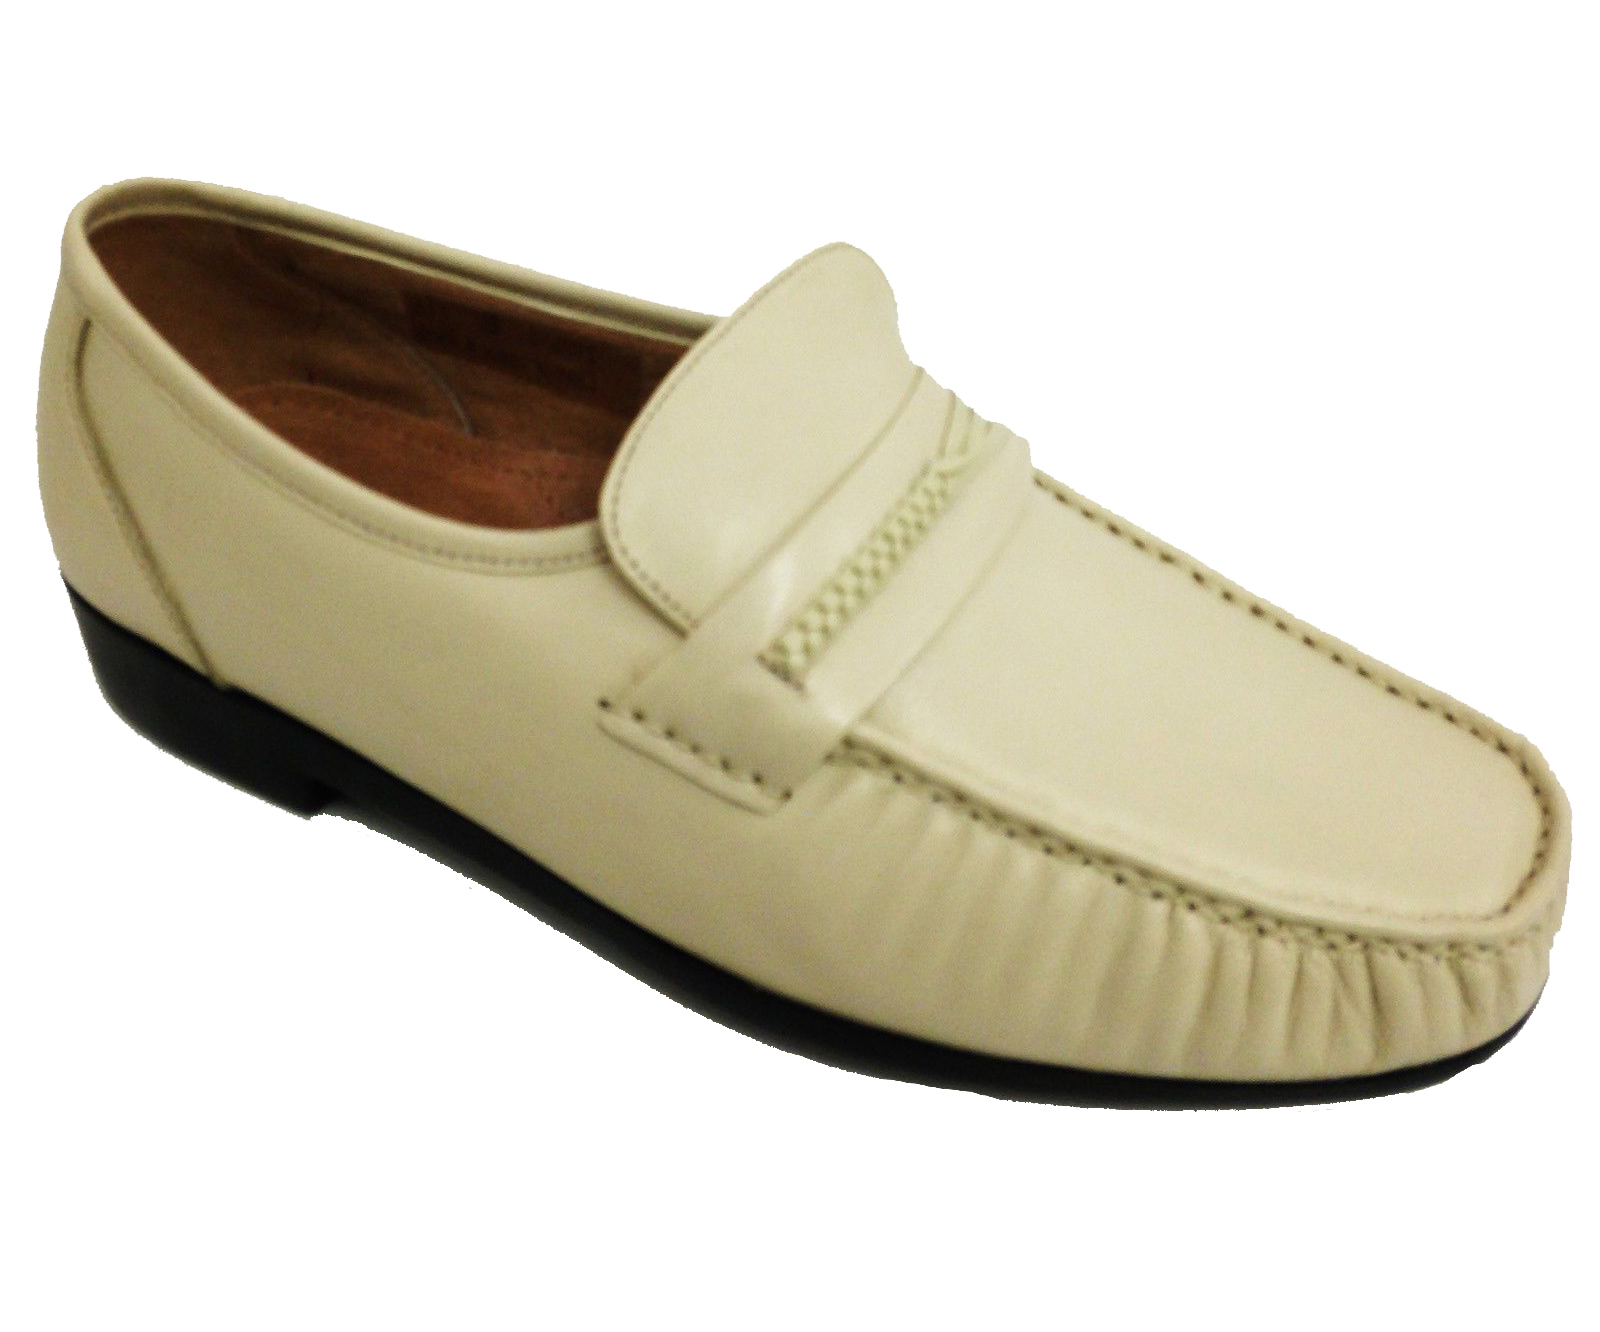 Men's Dress Loafers Leather Moc Toe Slip On Comfort Moccasin Shoes - image 1 of 3